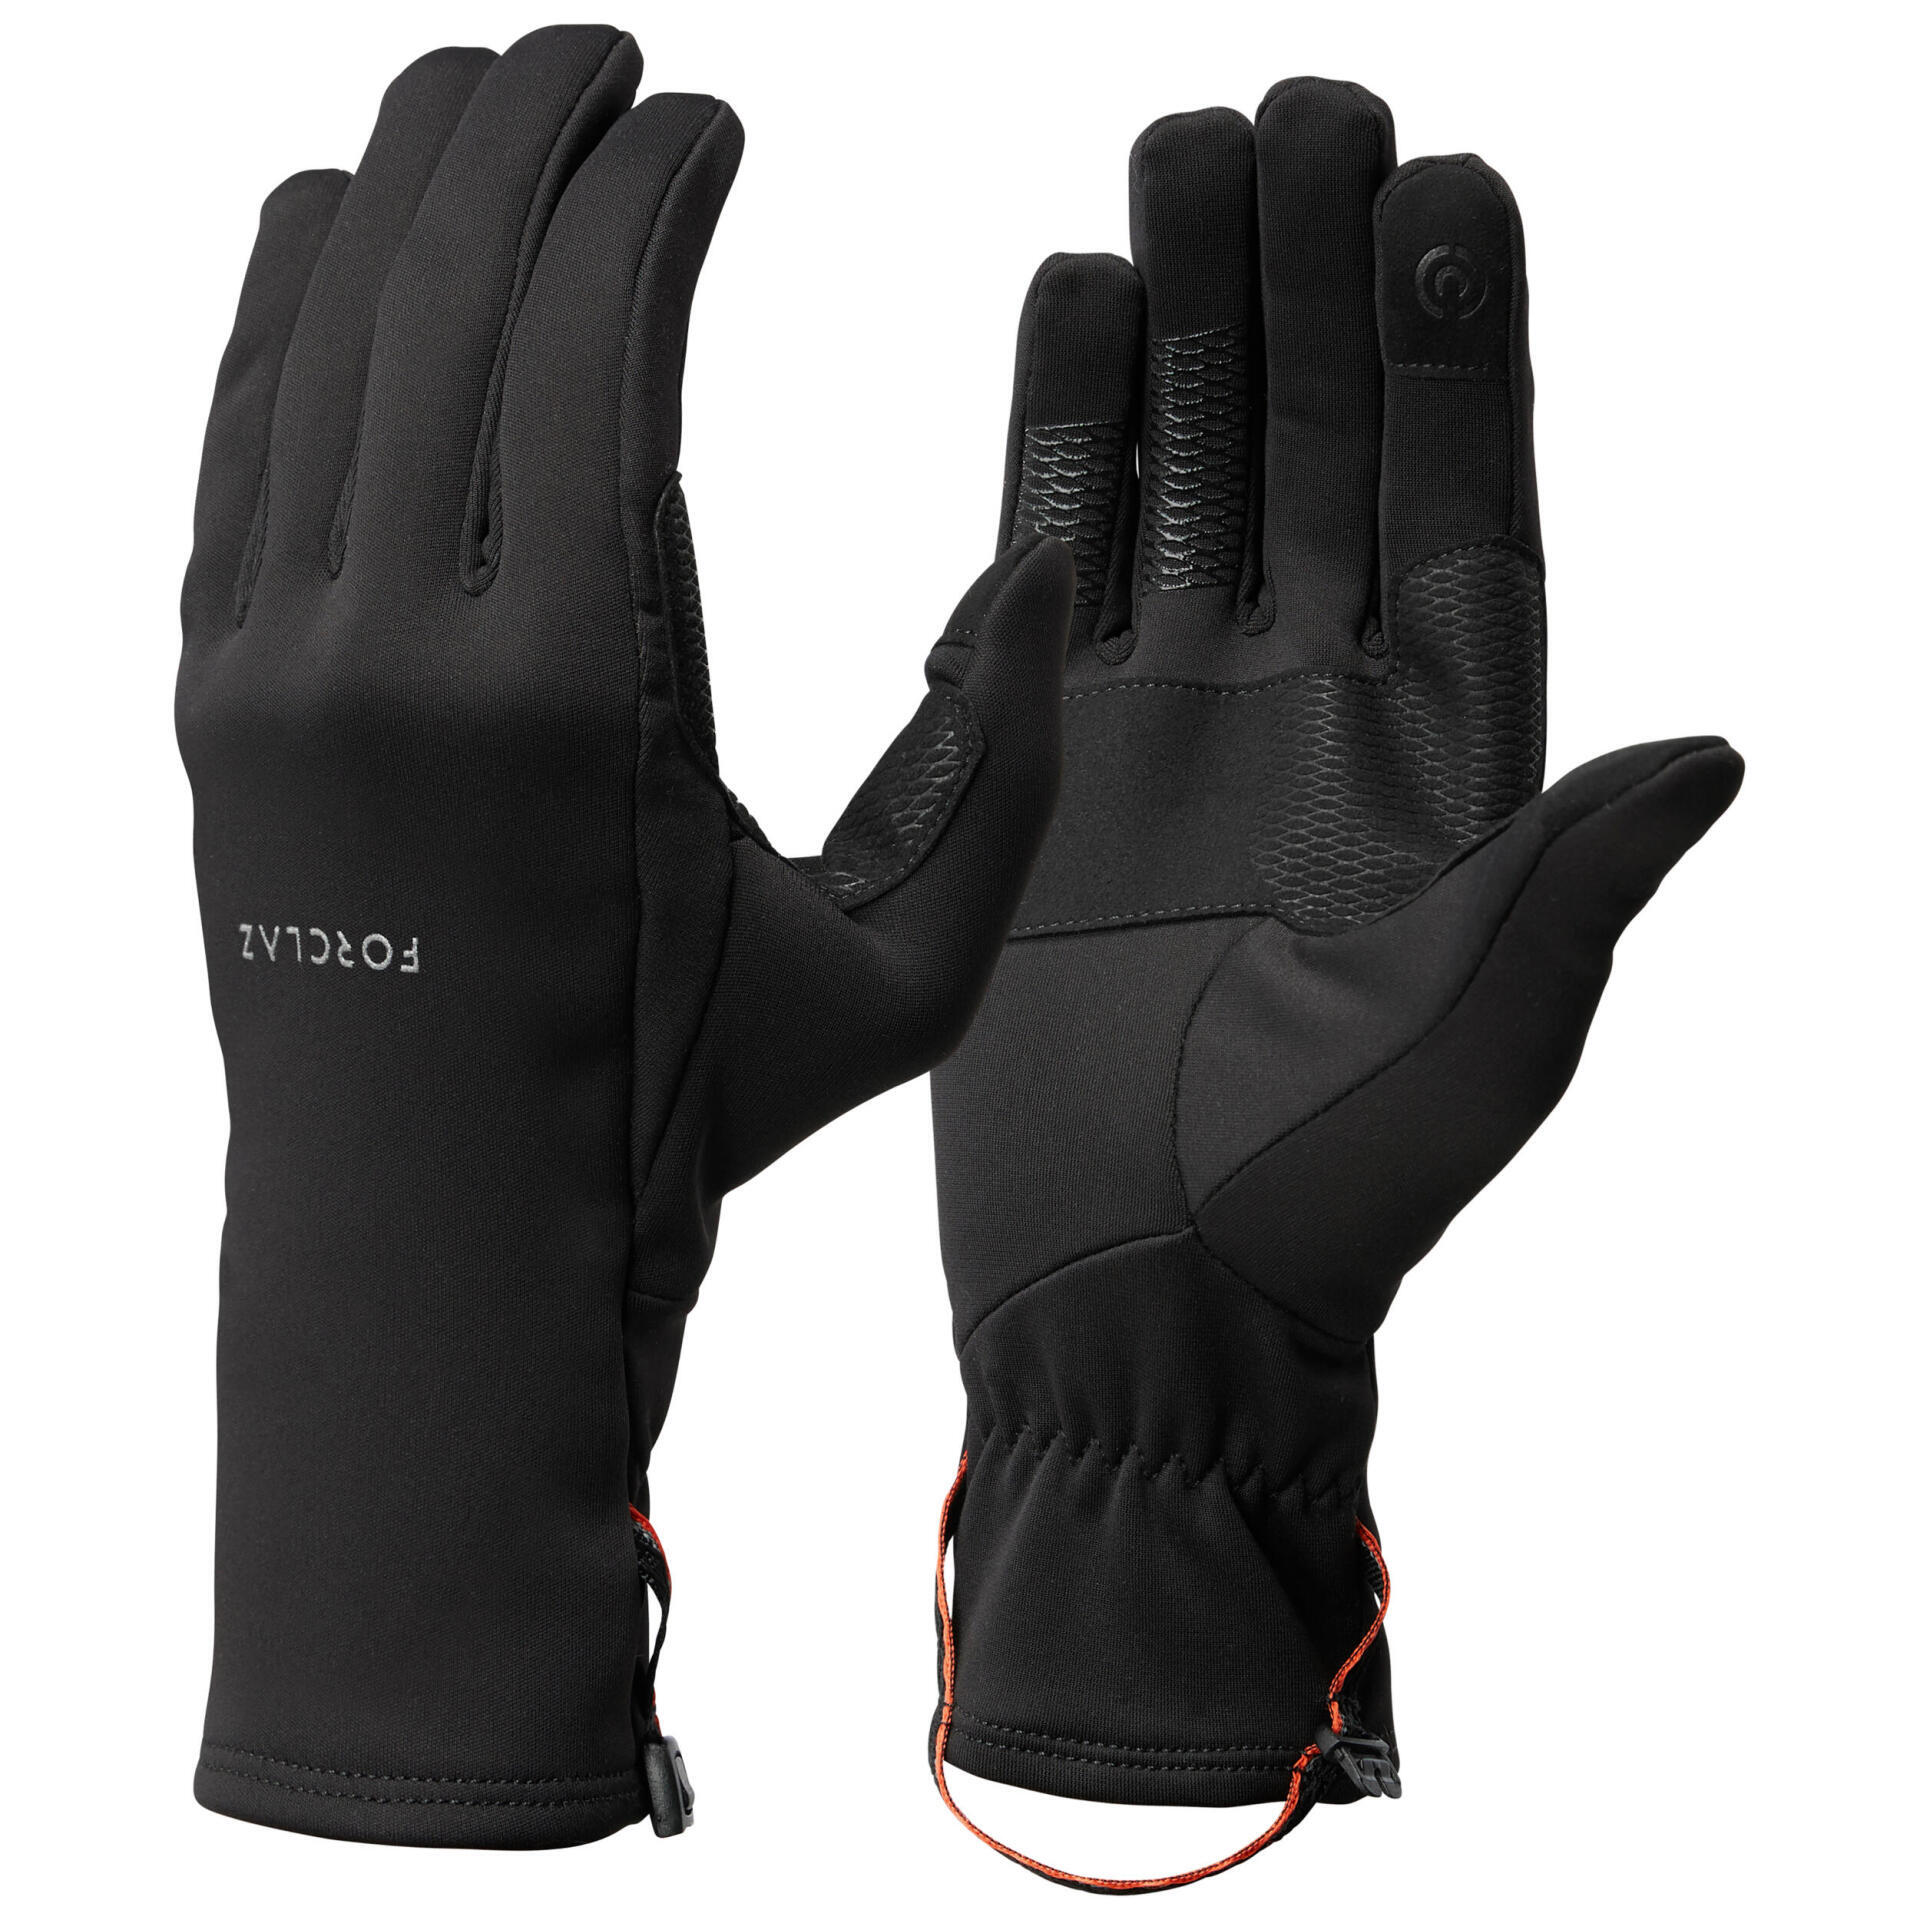 Forclaz warm hiking gloves